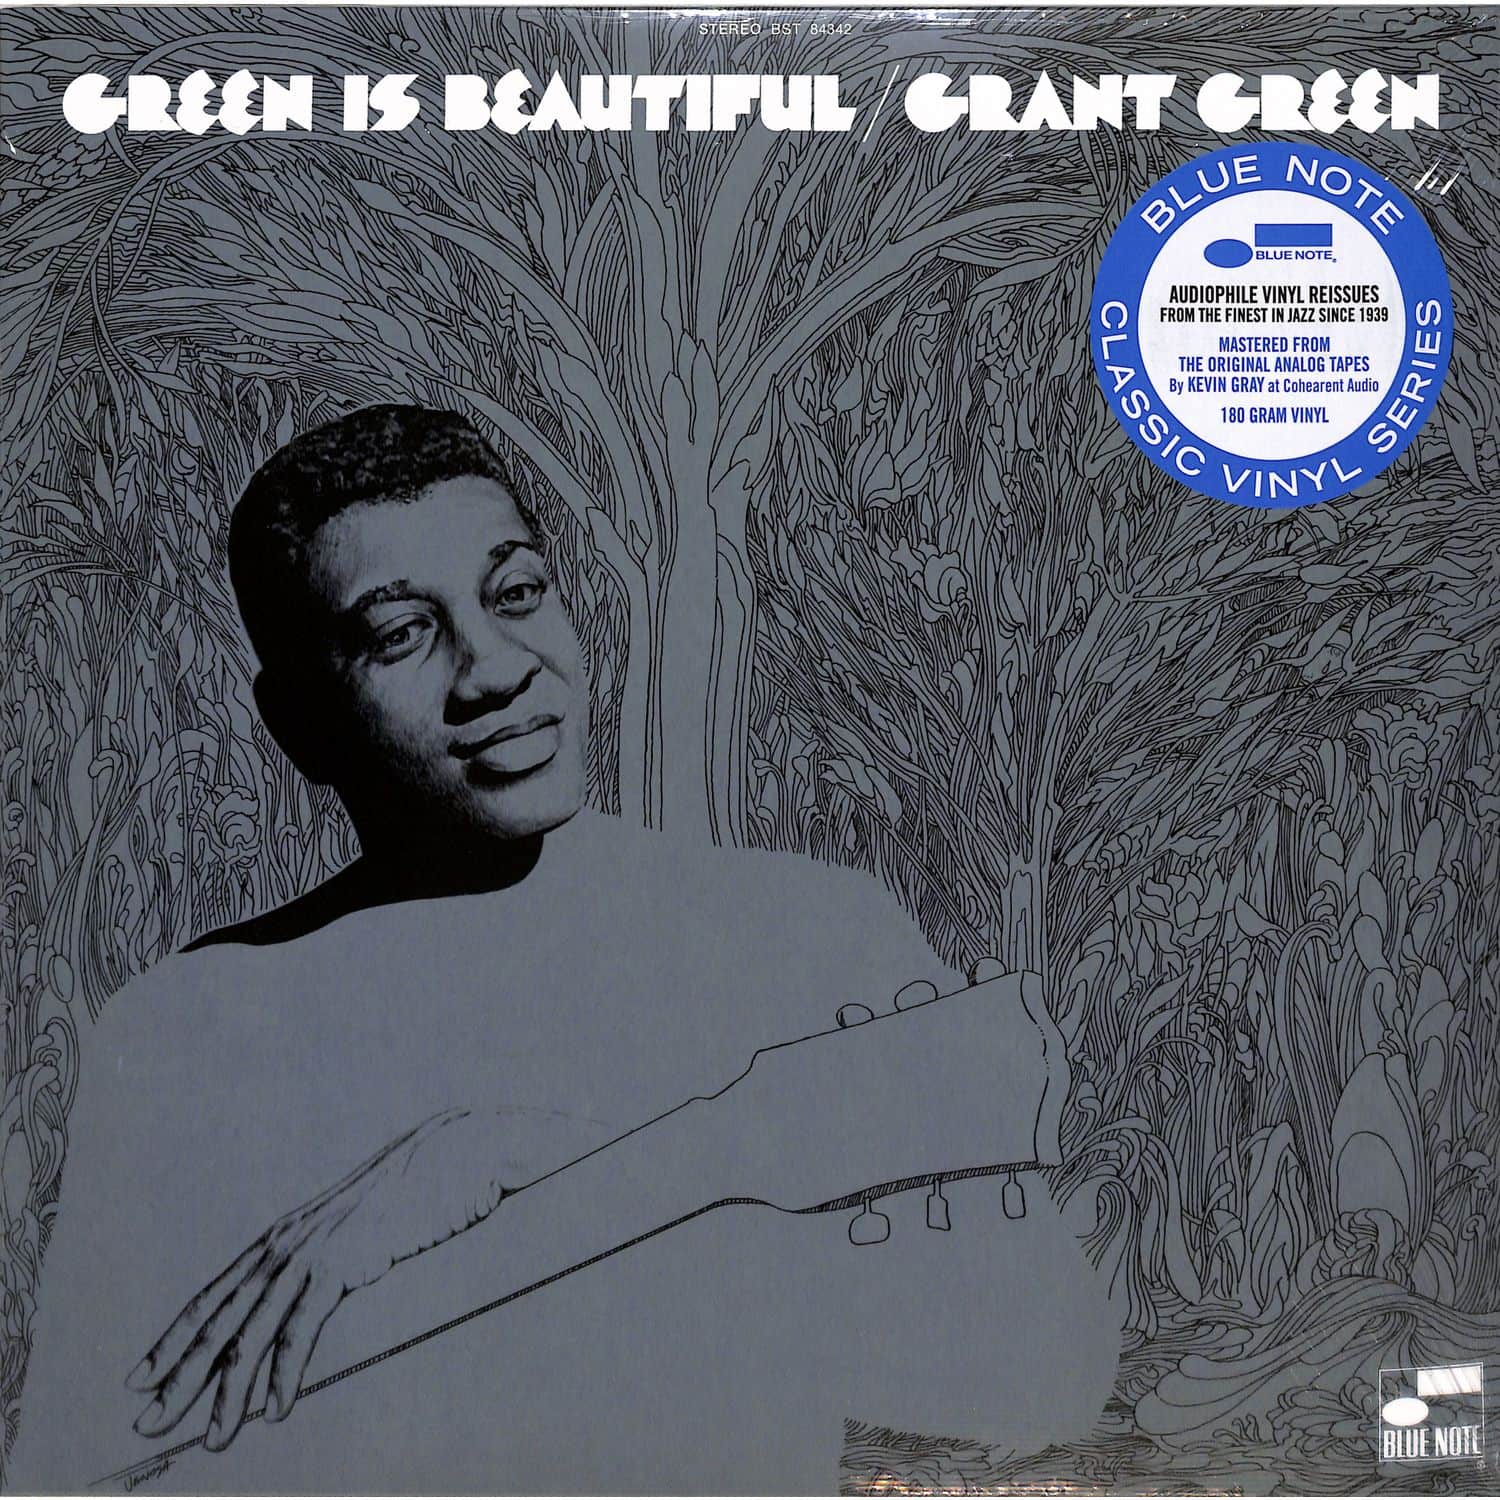 Grant Green - GREEN IS BEAUTIFUL 